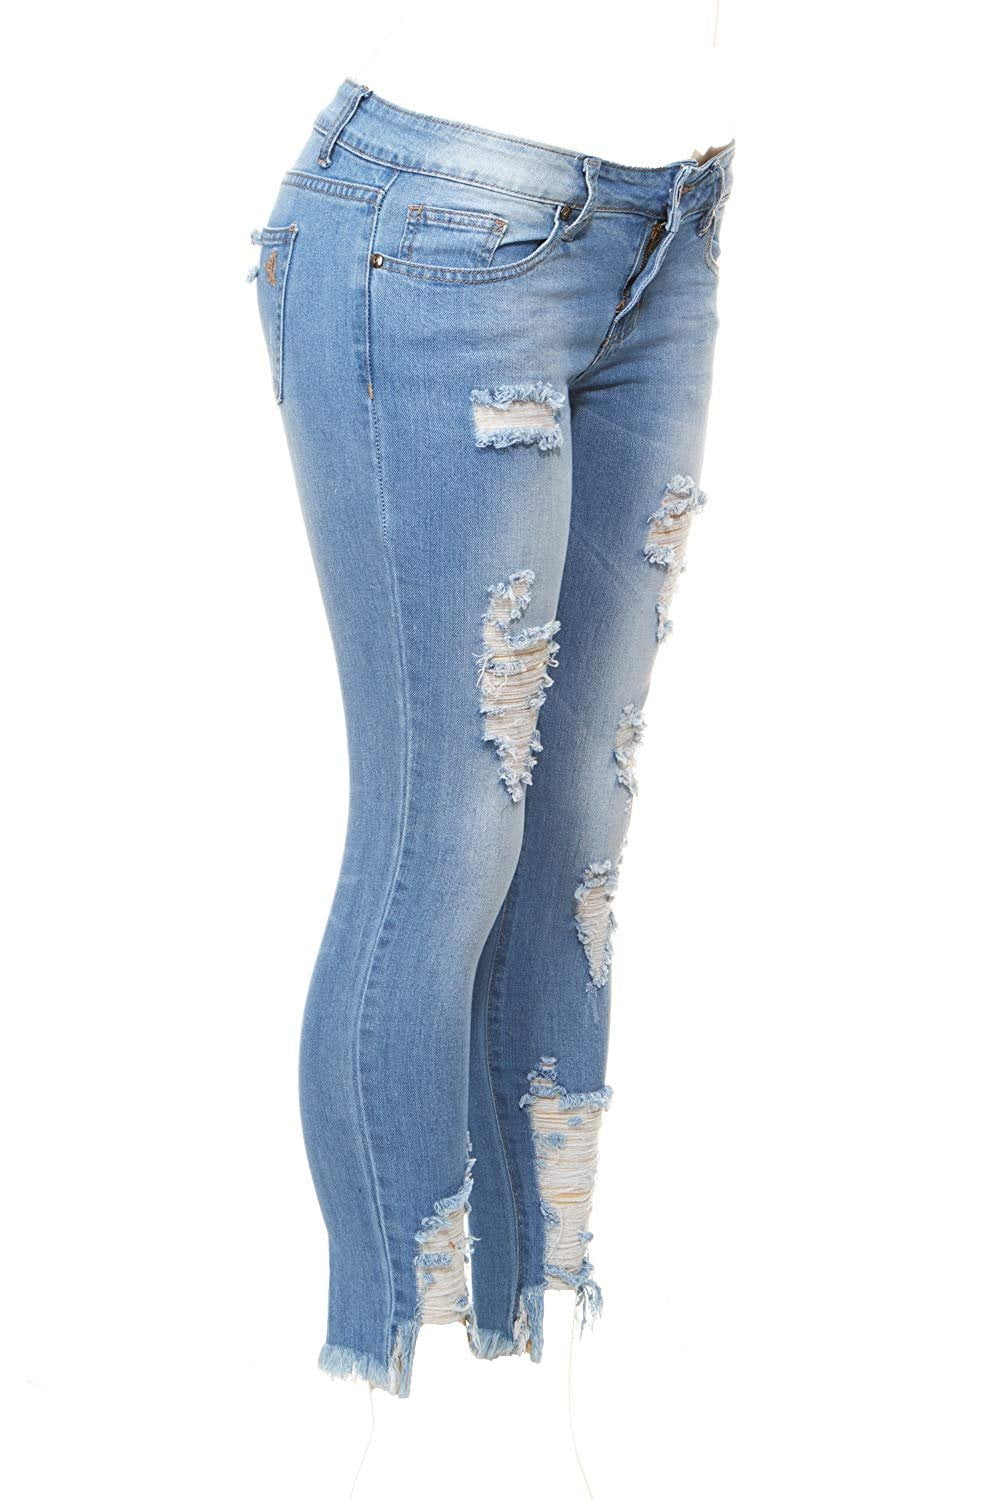 Cute Teen Girl Teen Girls's Size Distressed Ripped Jeans Juniors, Light Distressed, Plus 18 - Walmart.com